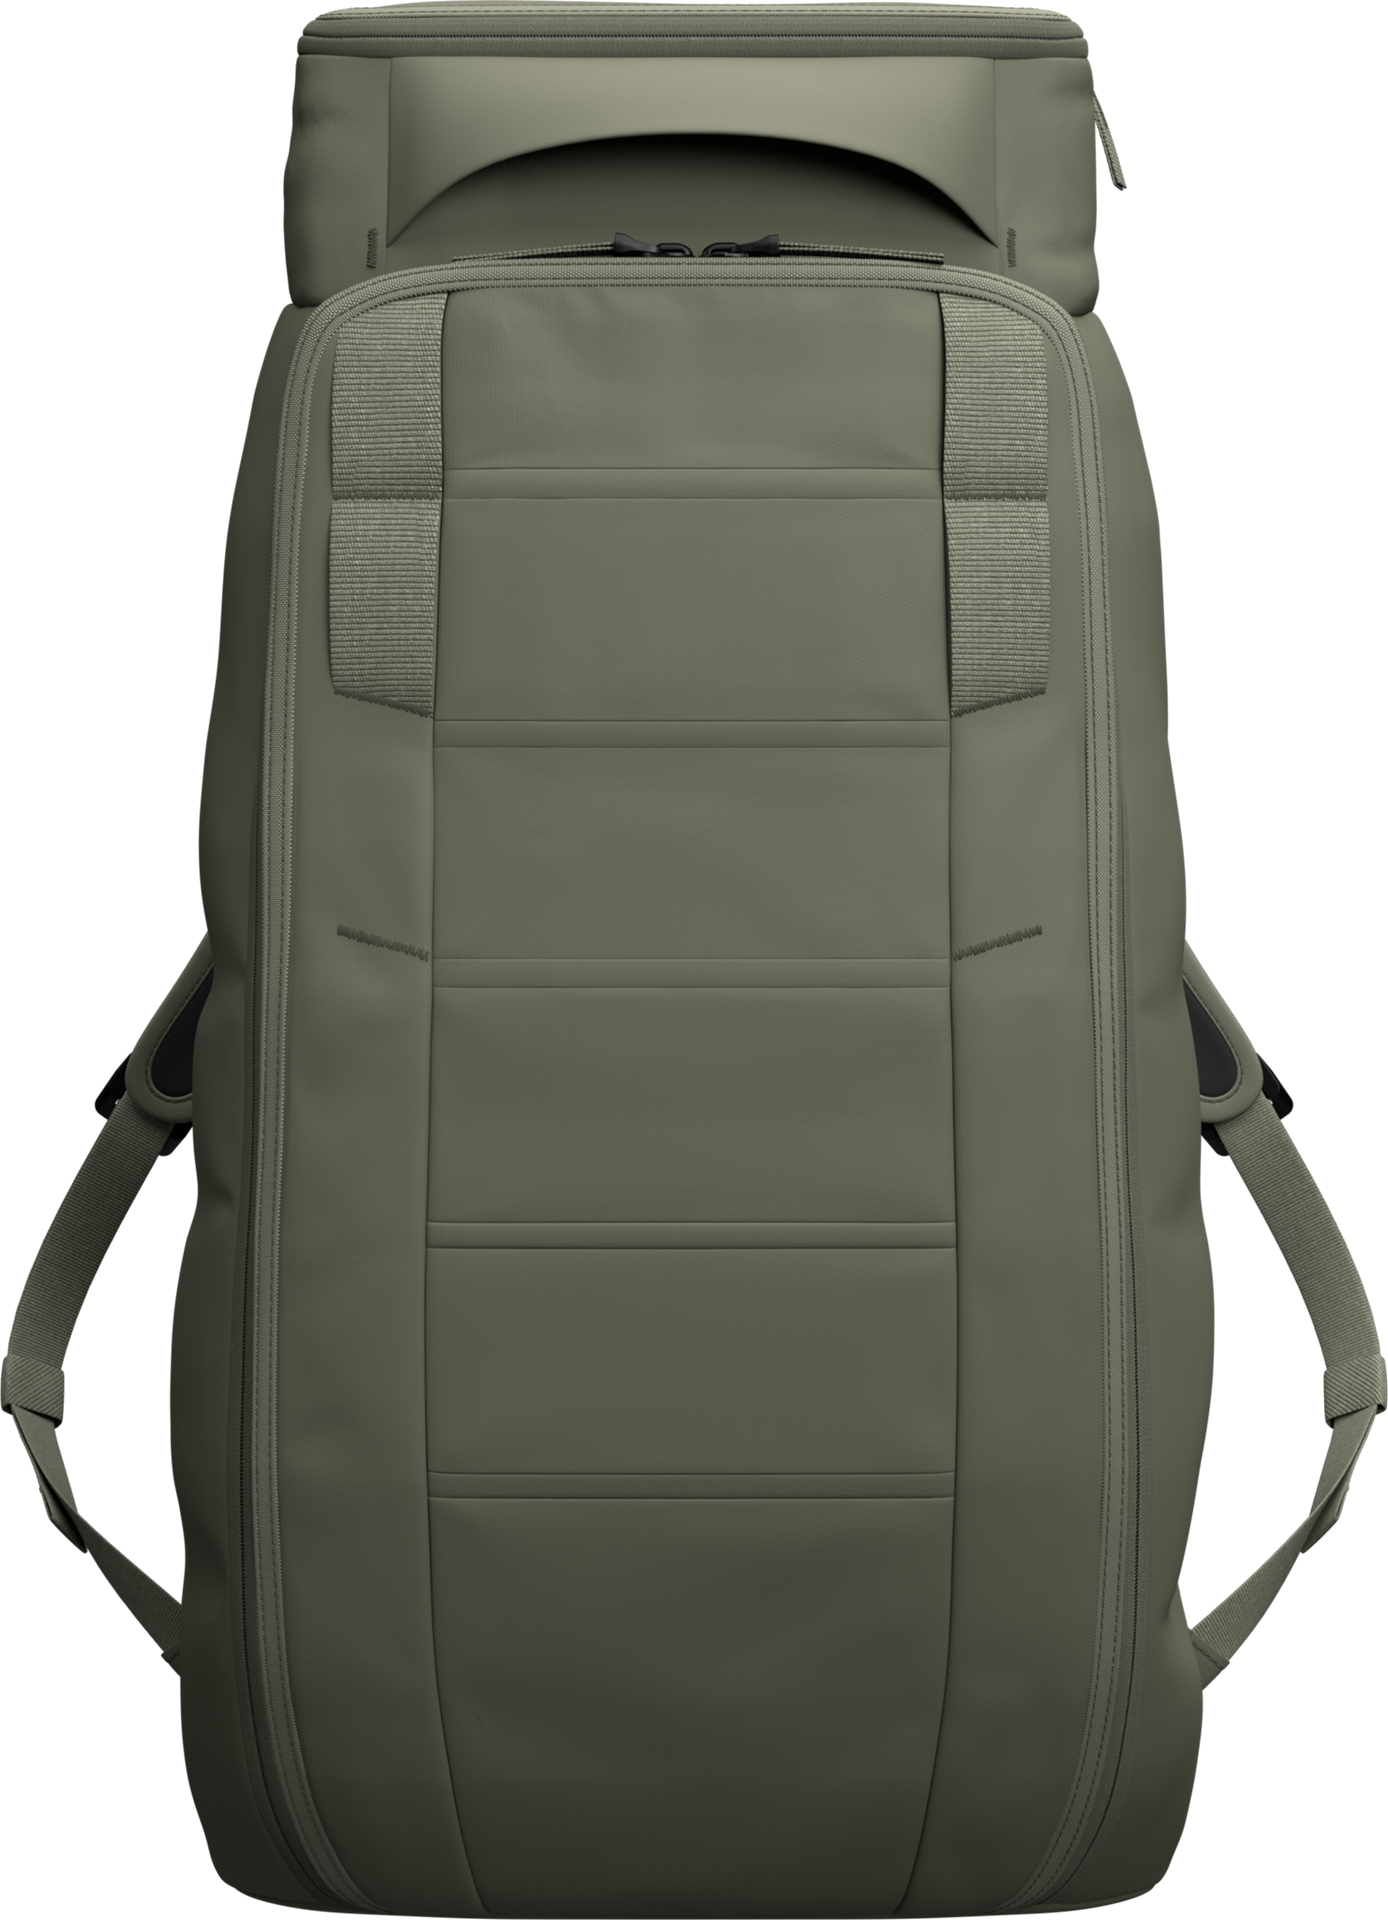 DB Journey Hugger Backpack - 30L - Moss Green Rugzak - Reisartikelen-nl